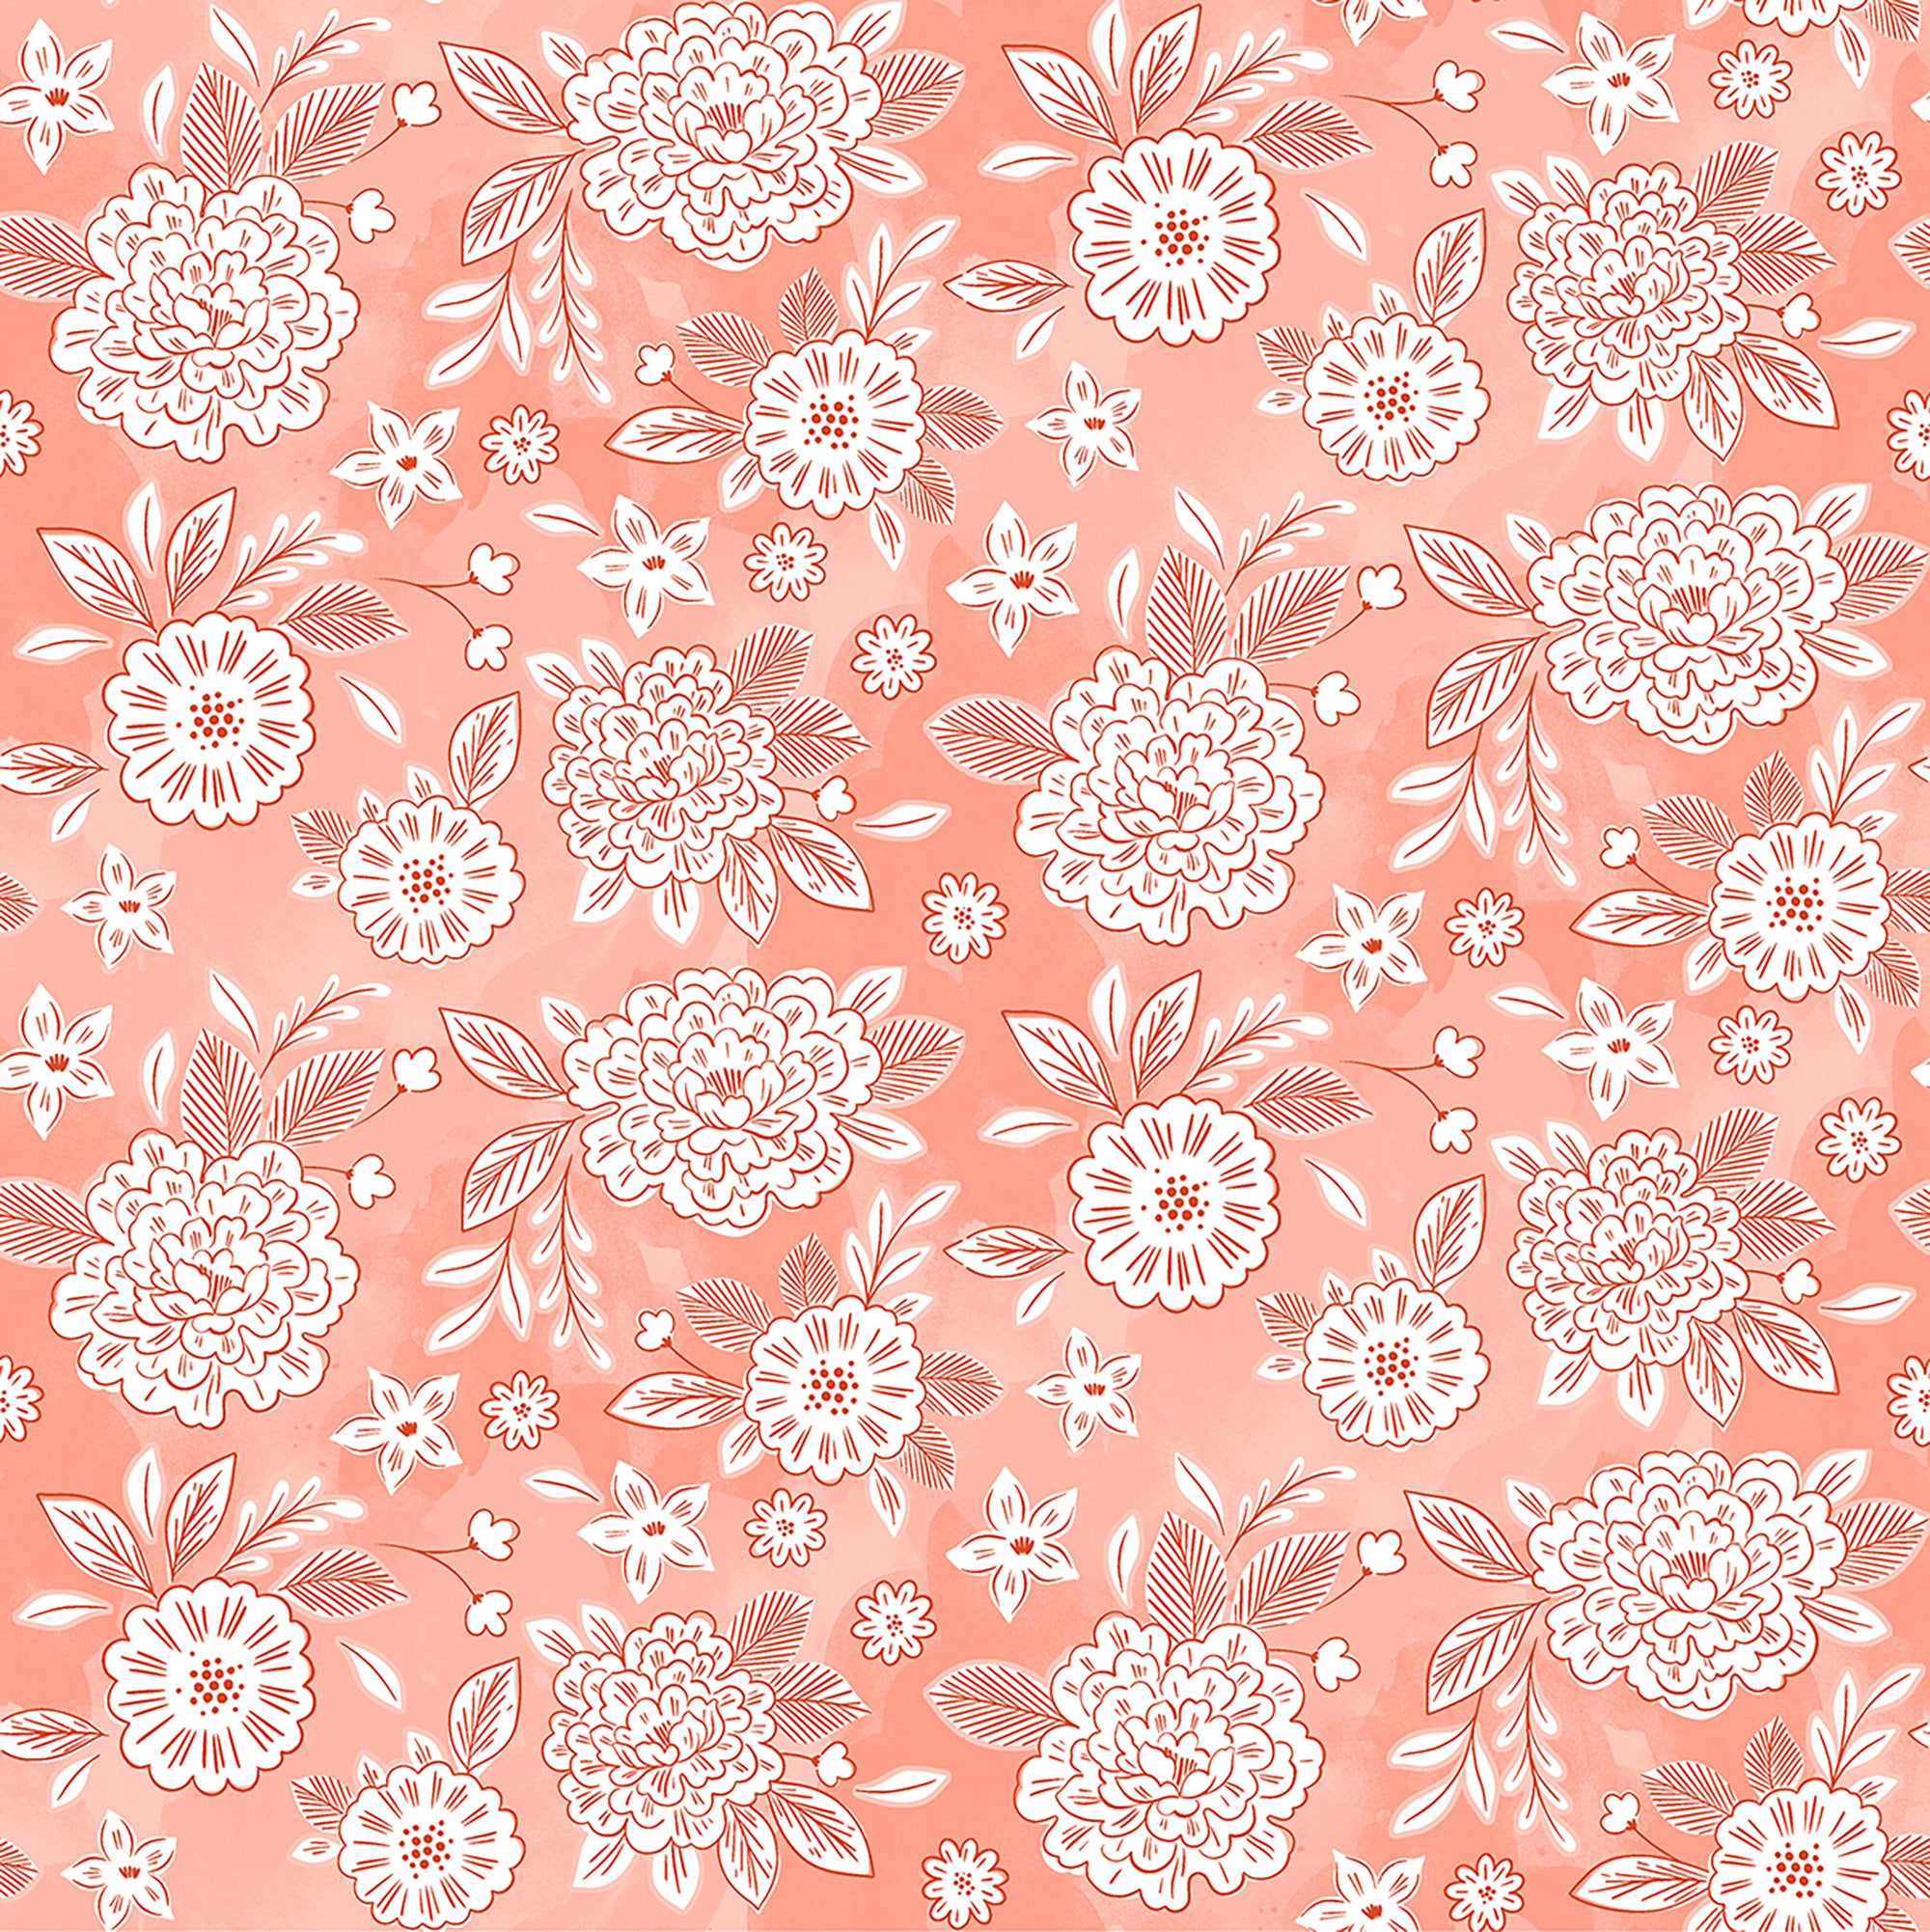 Earth Magic - Flower Dream - Pink Paradise Fabric